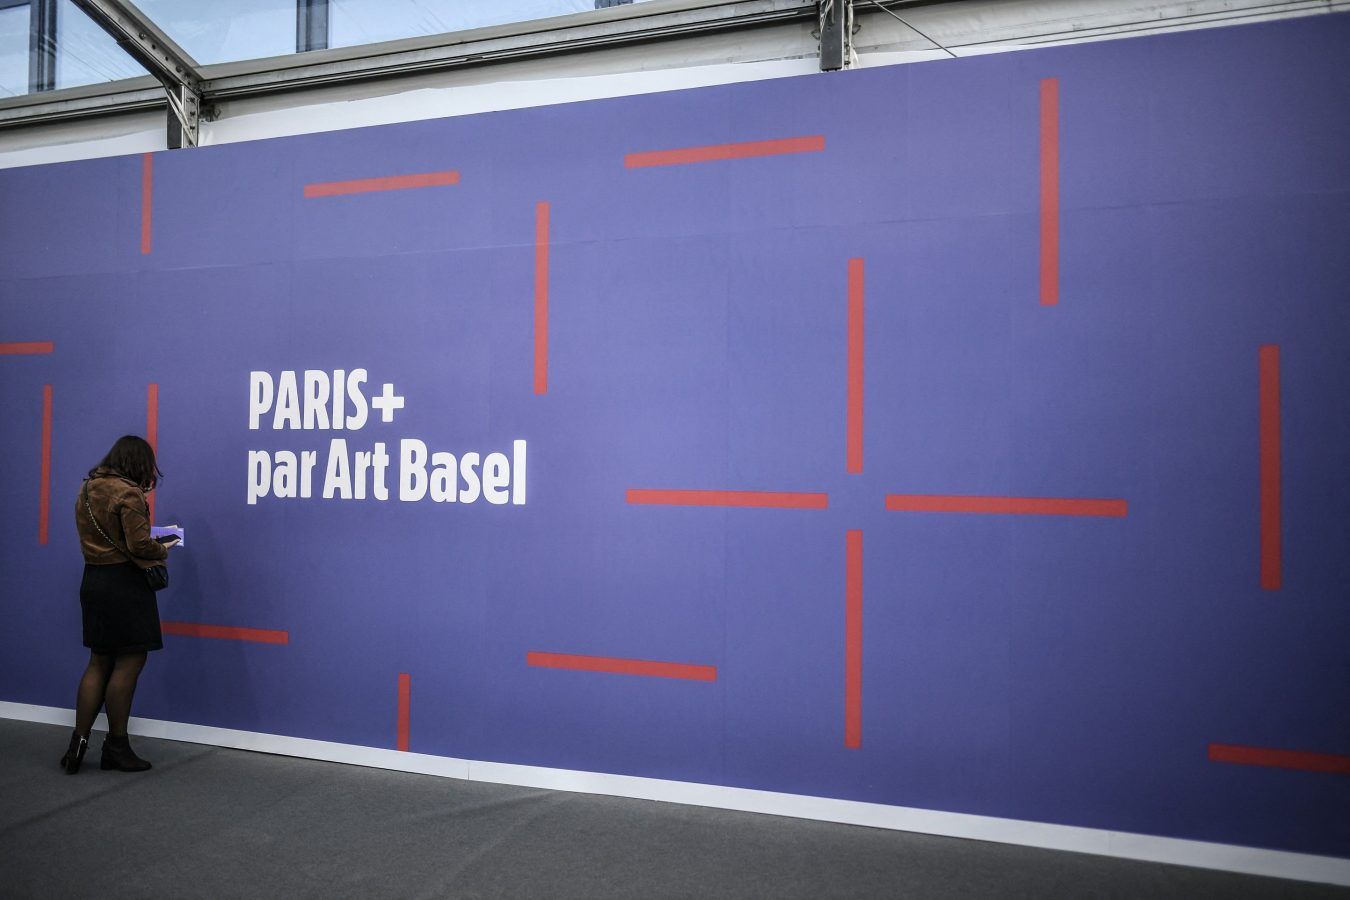 Art Basel Launches its Inaugural Fair in Paris with 